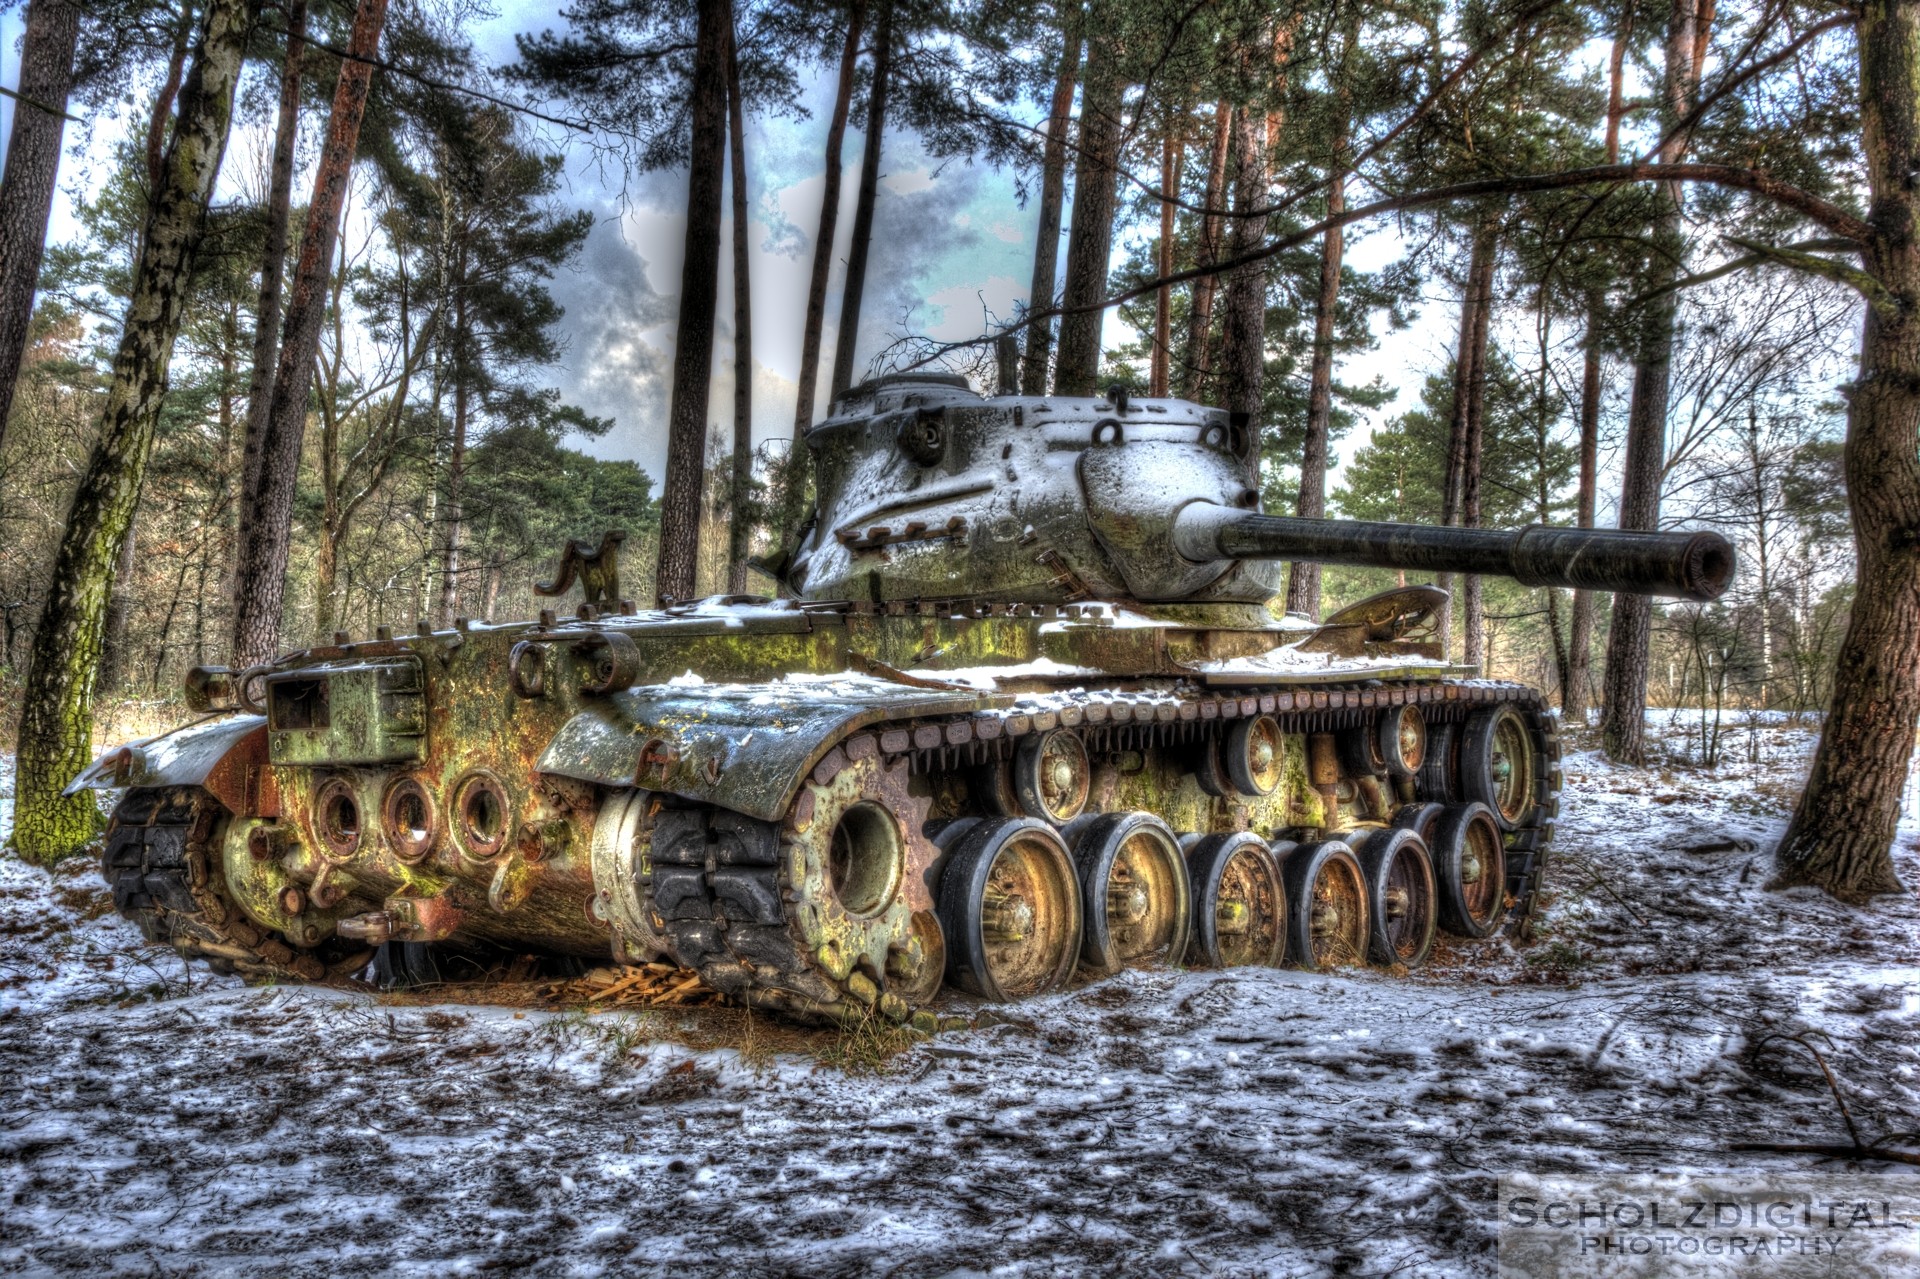 M47 Medium Tank – 90 mm Gun